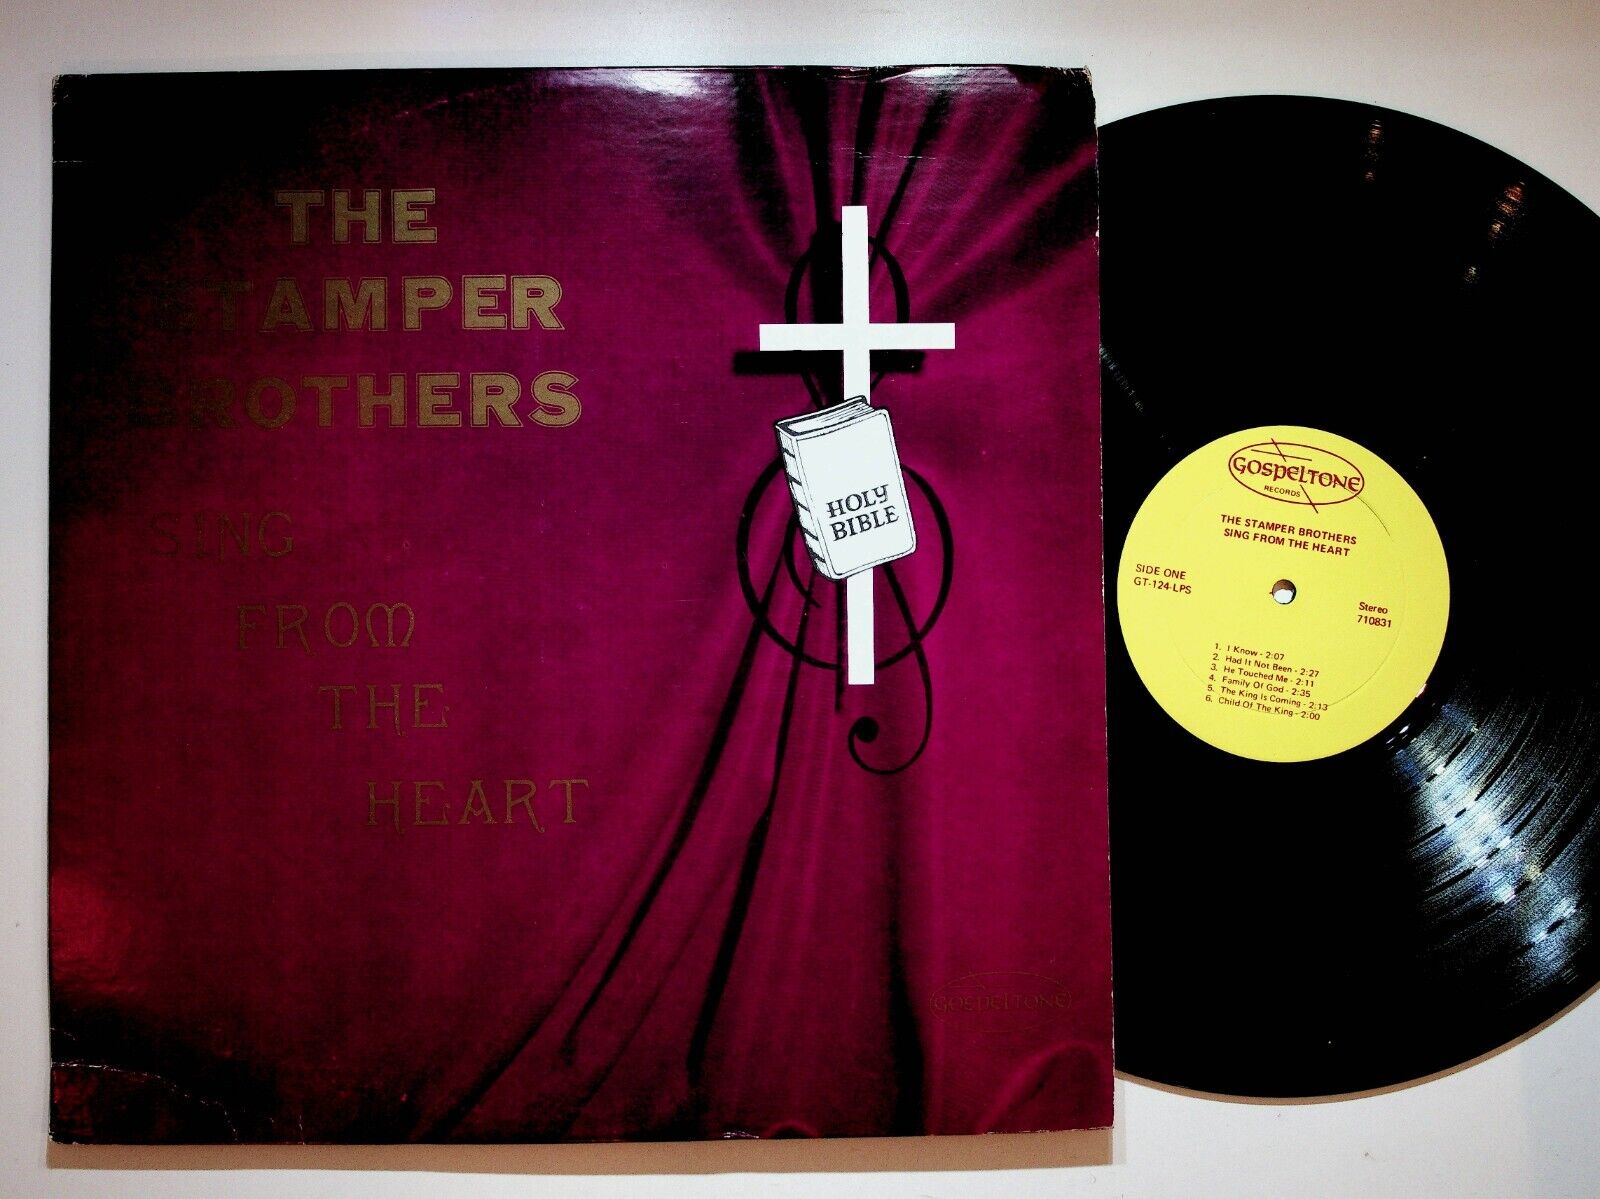 Orlando Florida Stamper Brothers From Heart Gospel Christian Vinyl LP Record VG+